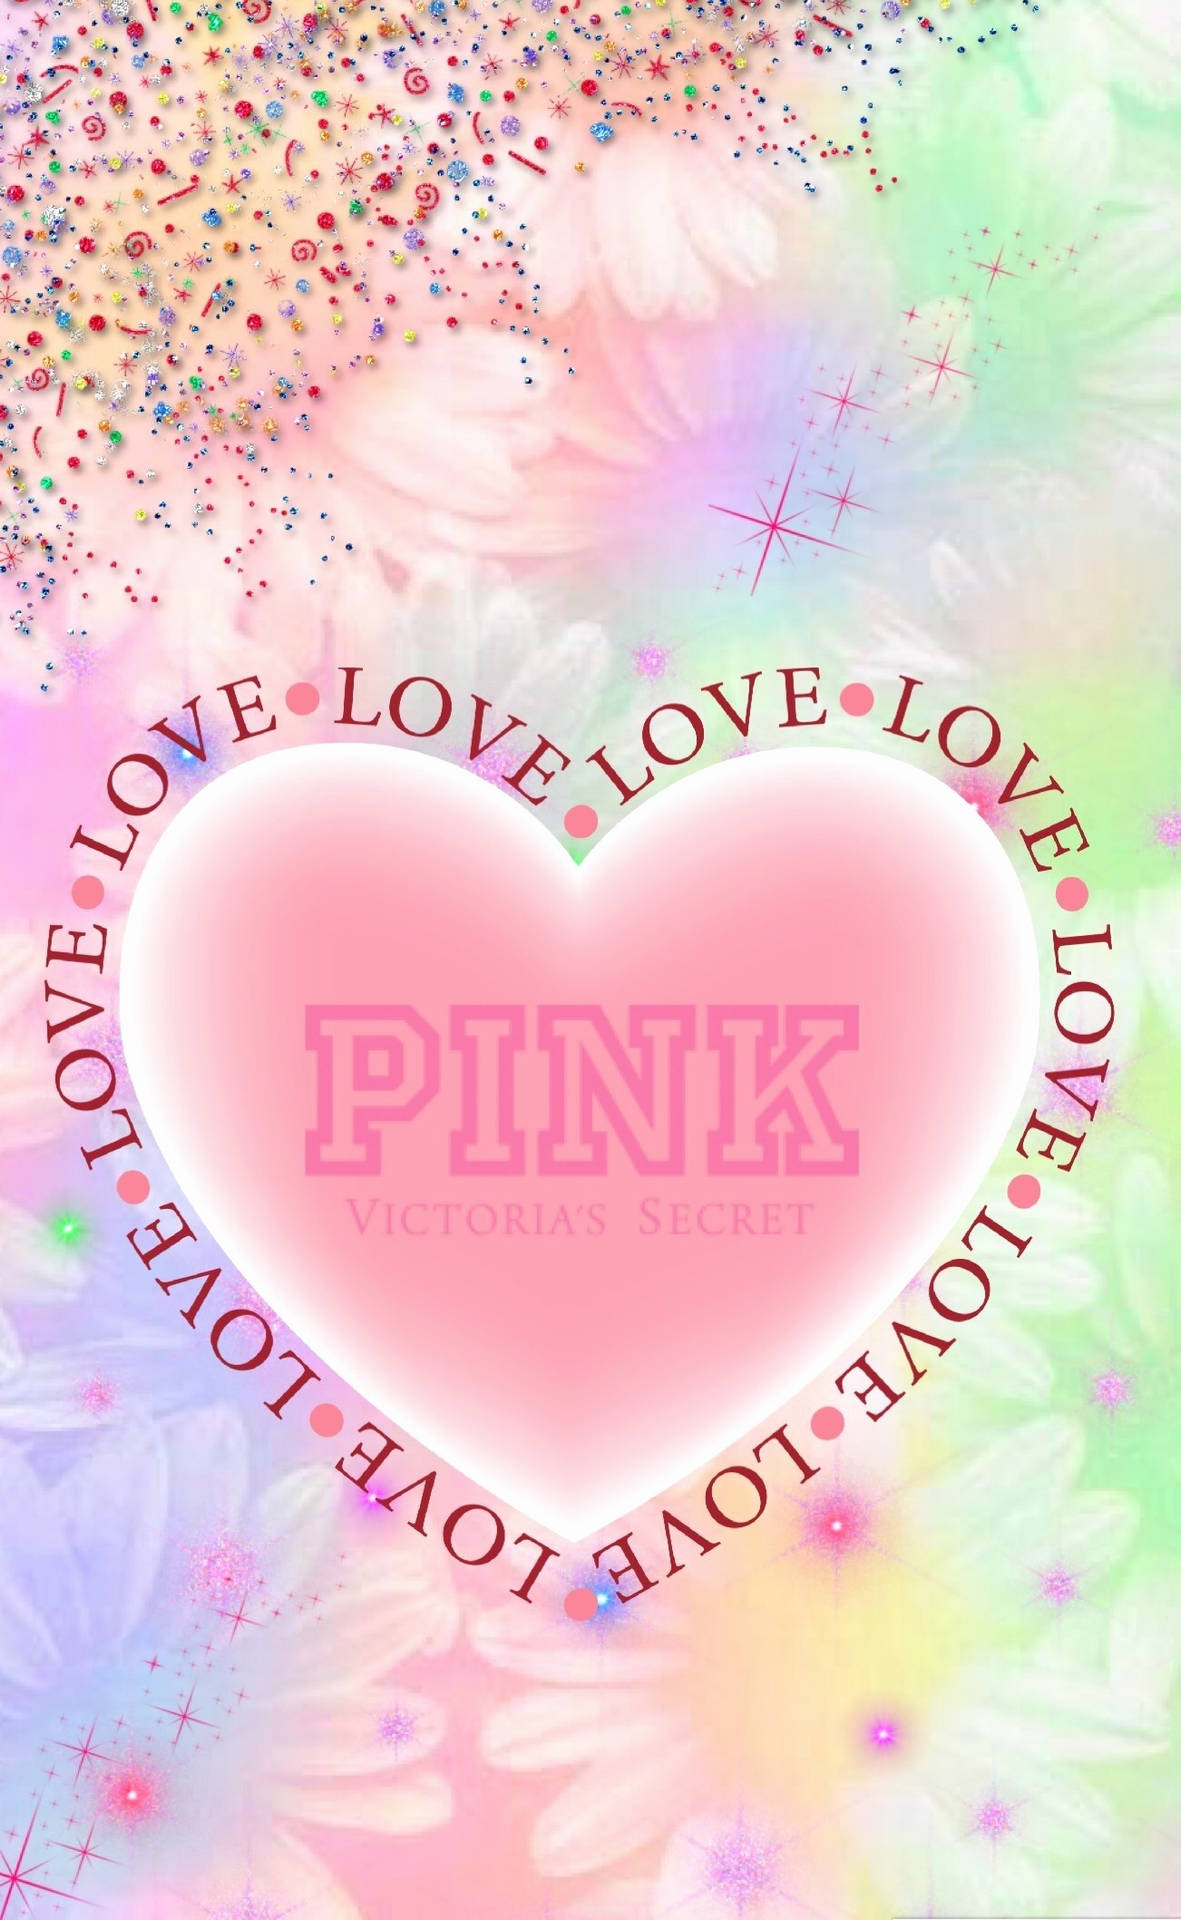 Victoria's Secret Heart Pink Floral Wallpaper